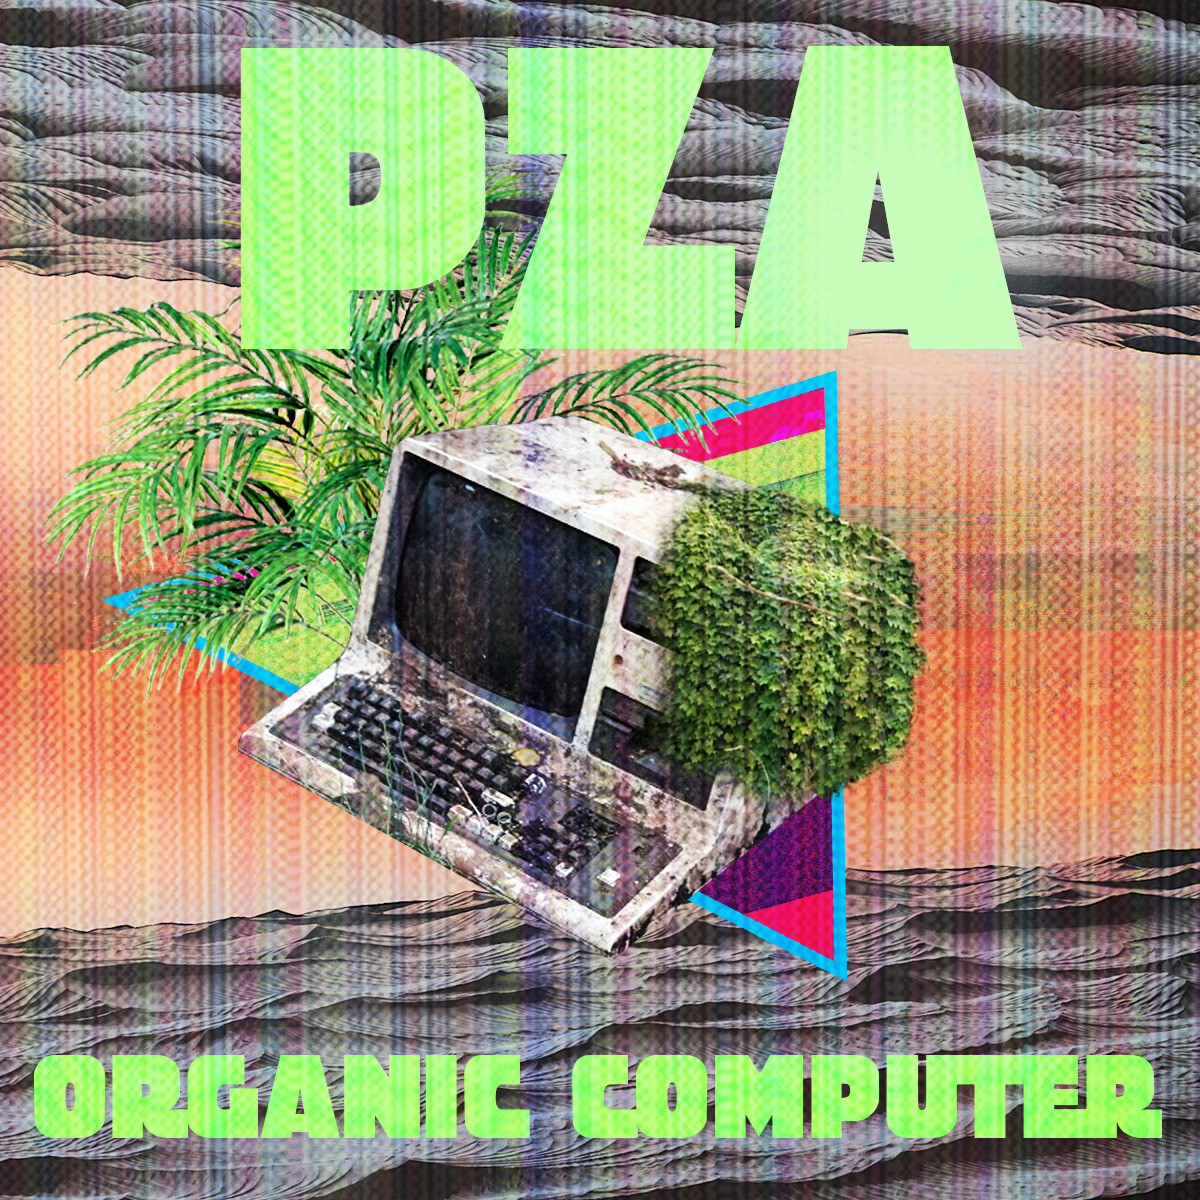 Organic computer